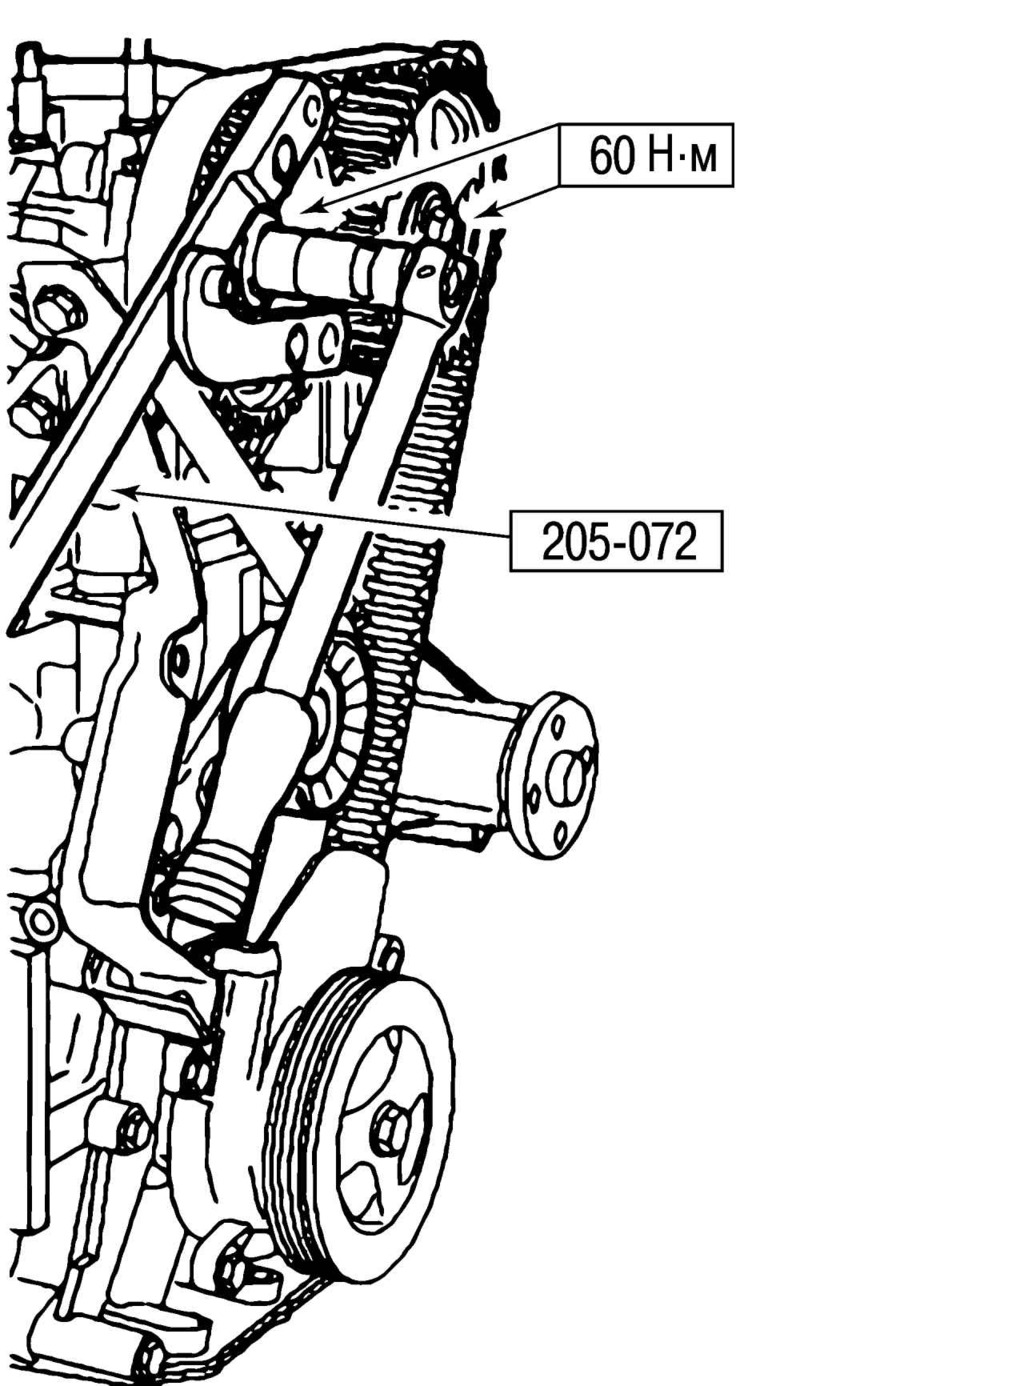 Двигатель Форд Фокус 2.0, устройство, характеристика ...